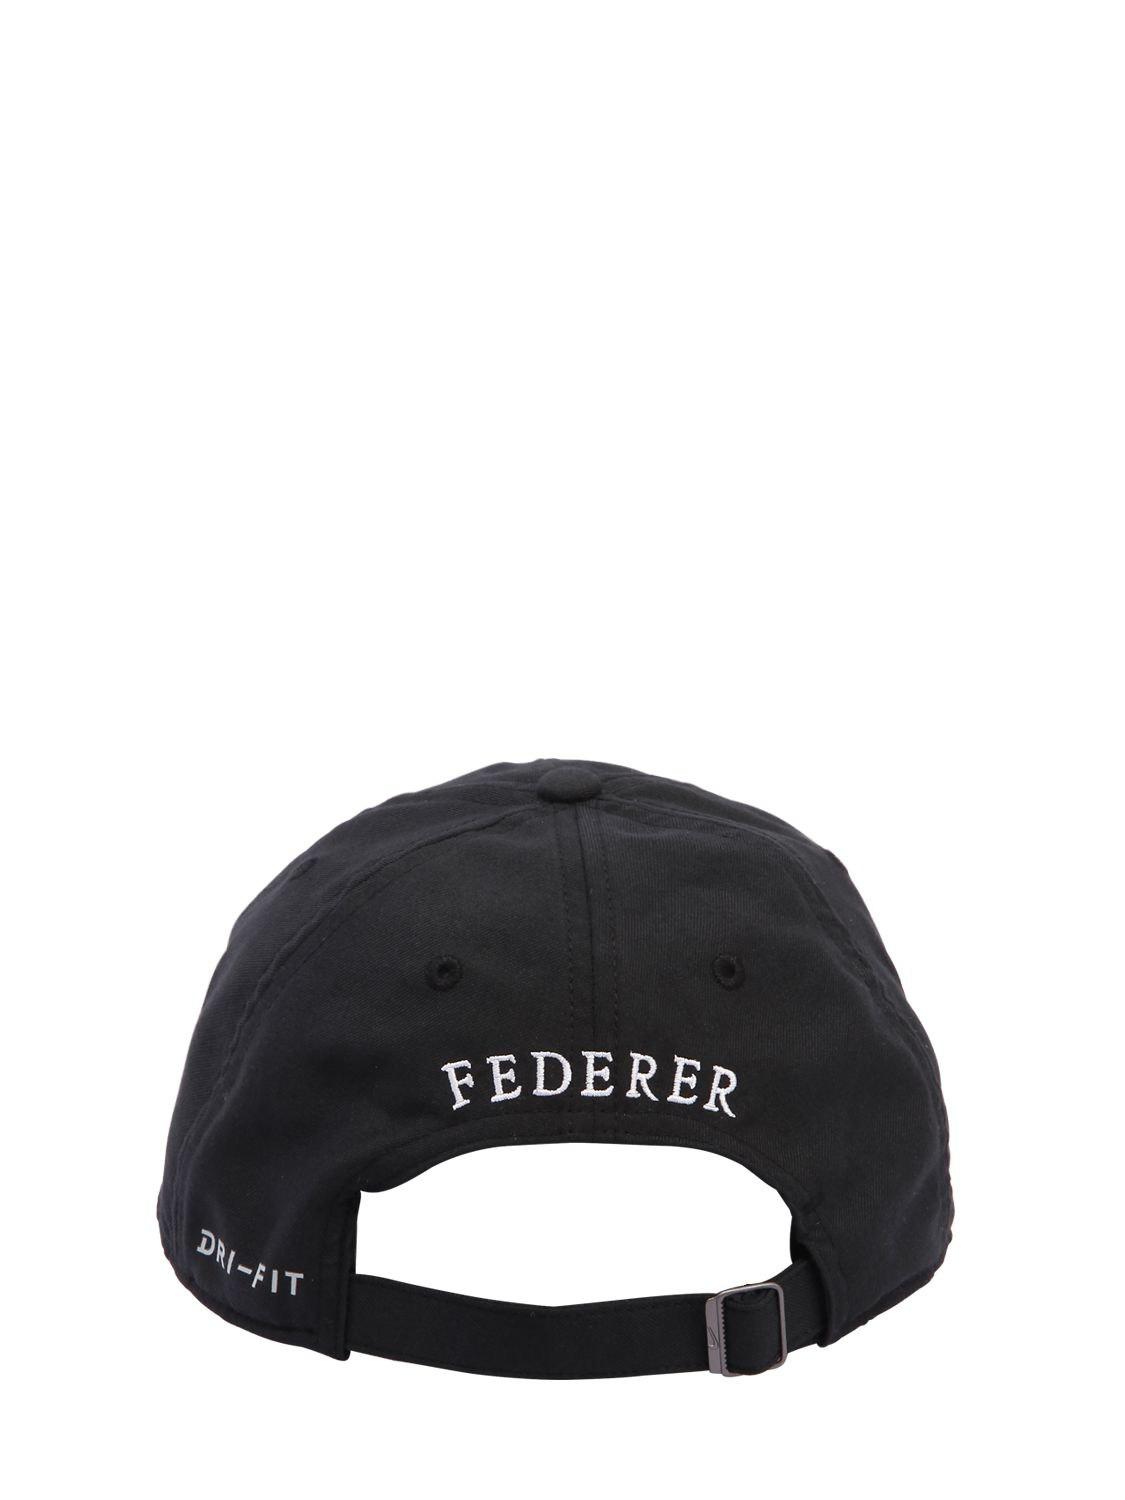 Nike Roger Federer Aerobill Heritage86 Hat in Black | Lyst